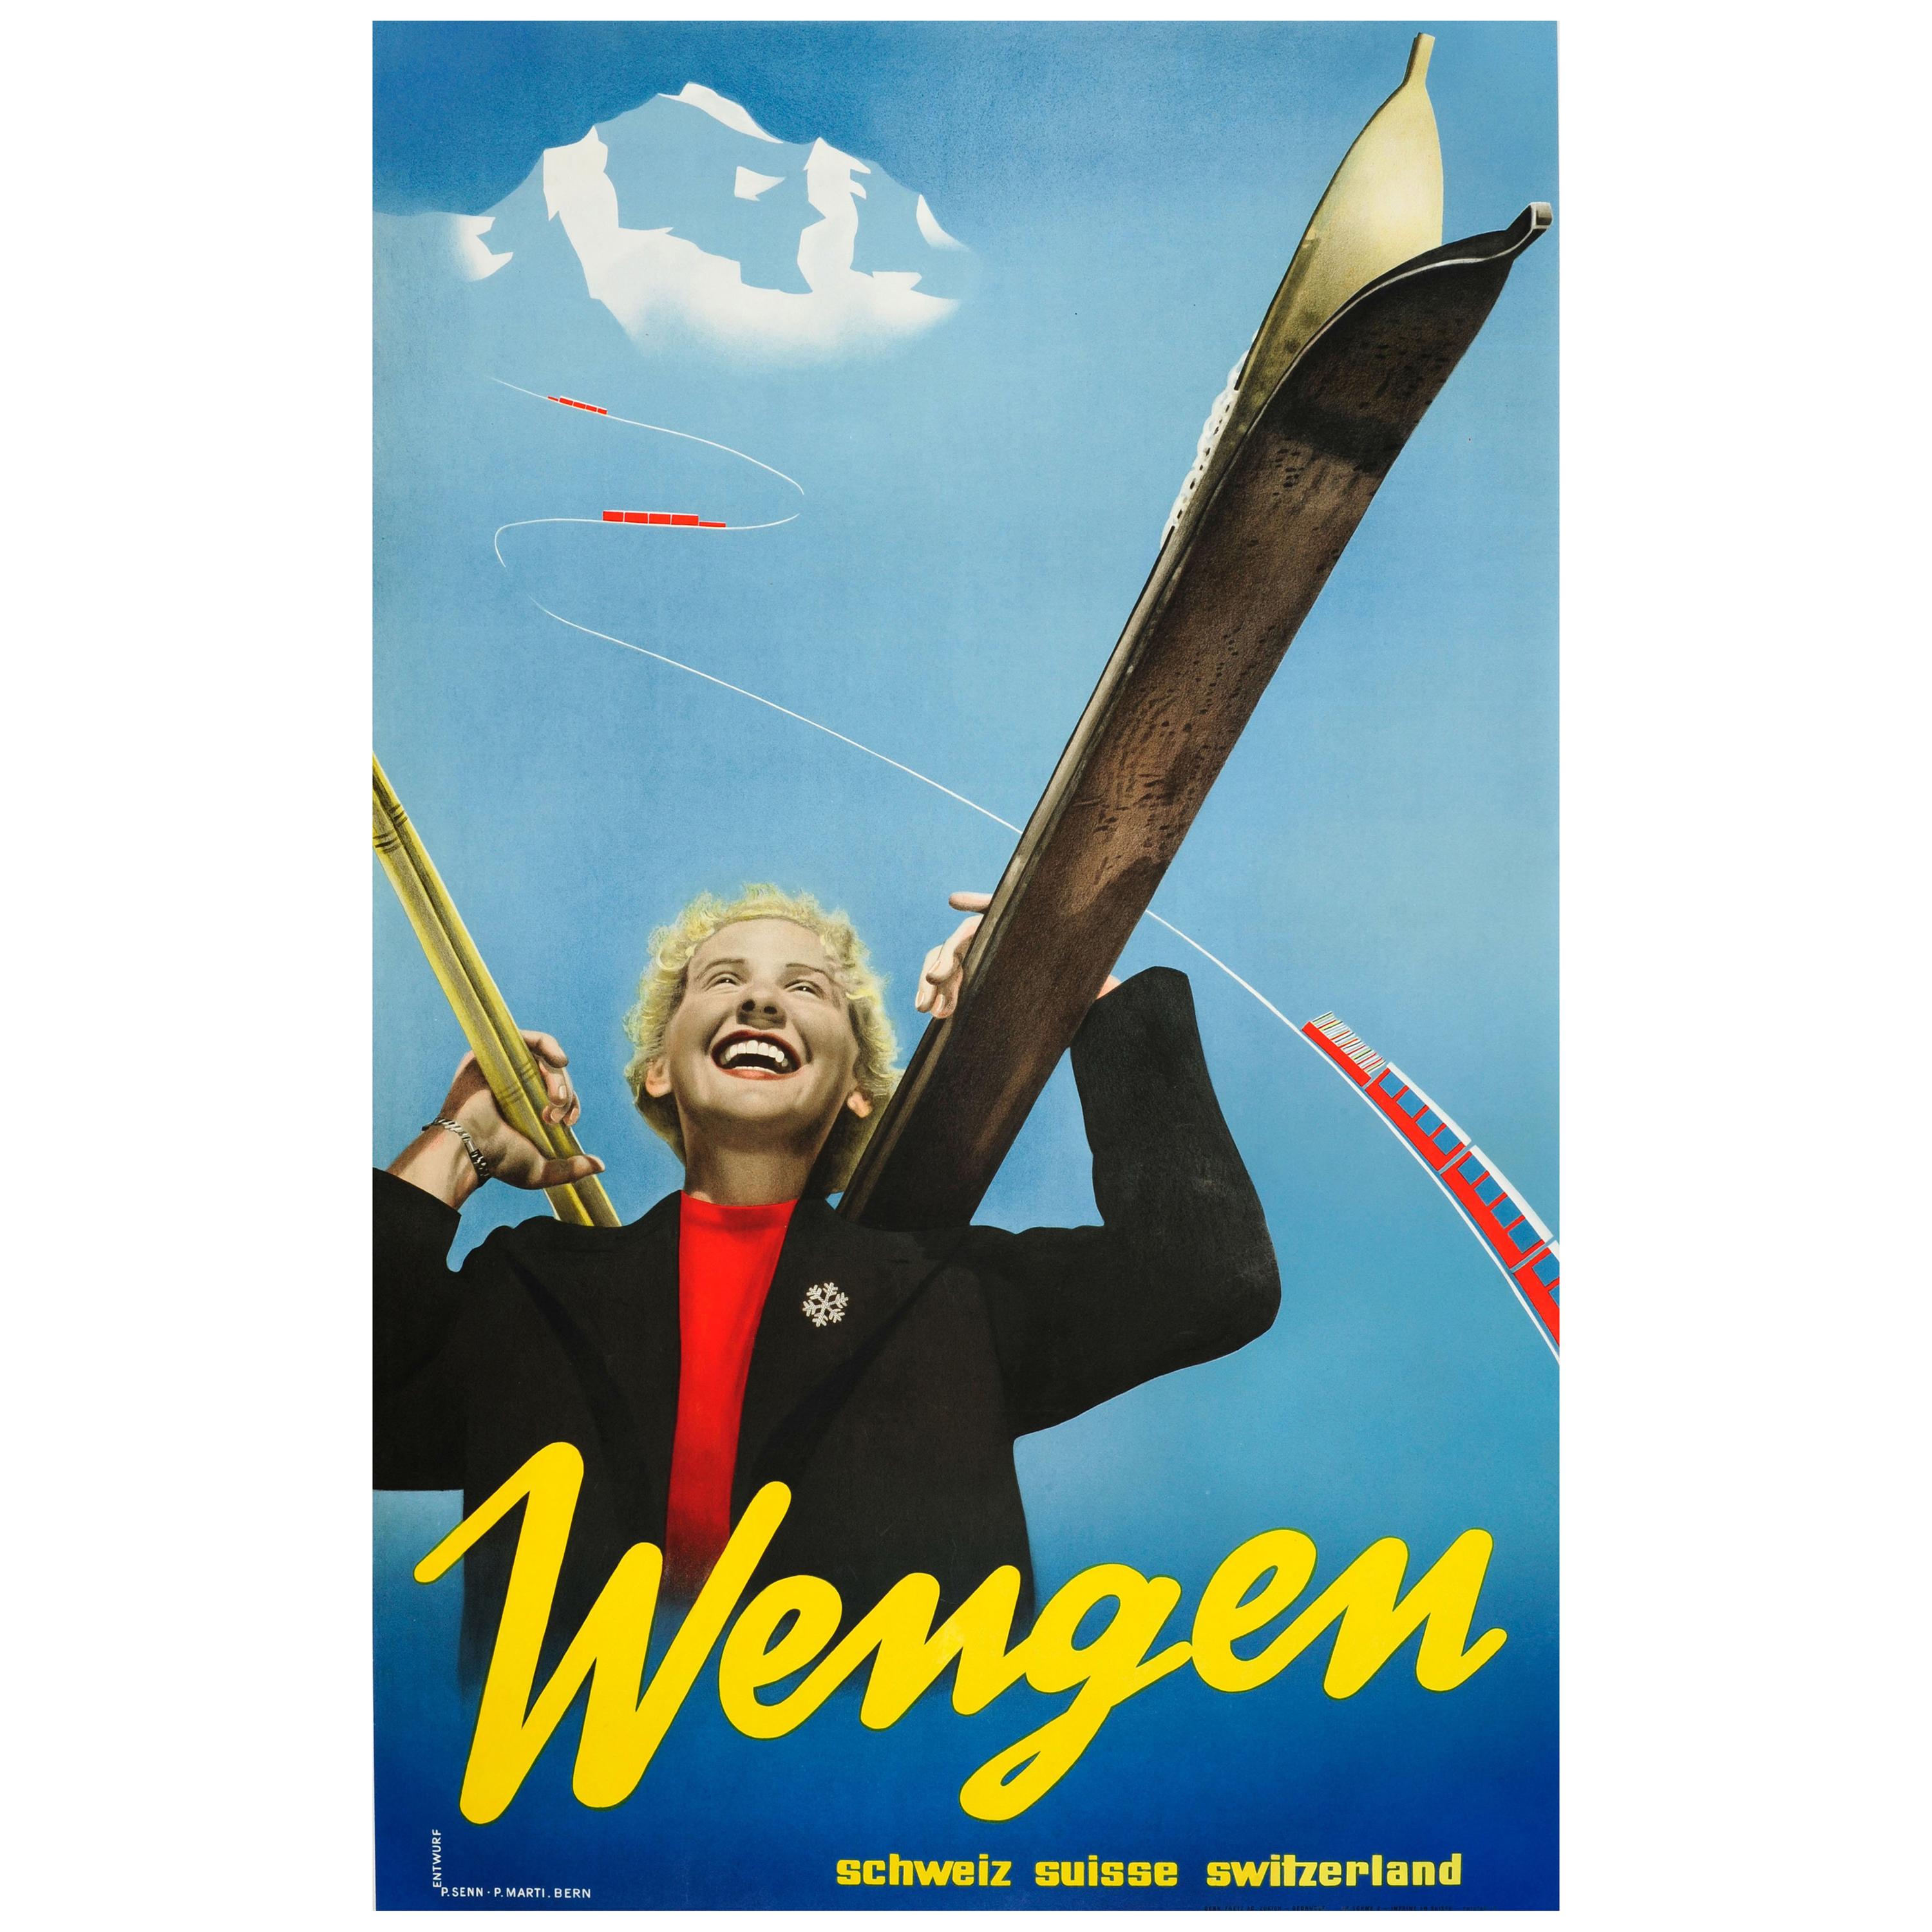 Original Vintage Swiss Ski Travel Poster for Wengen Switzerland Bernese Oberland